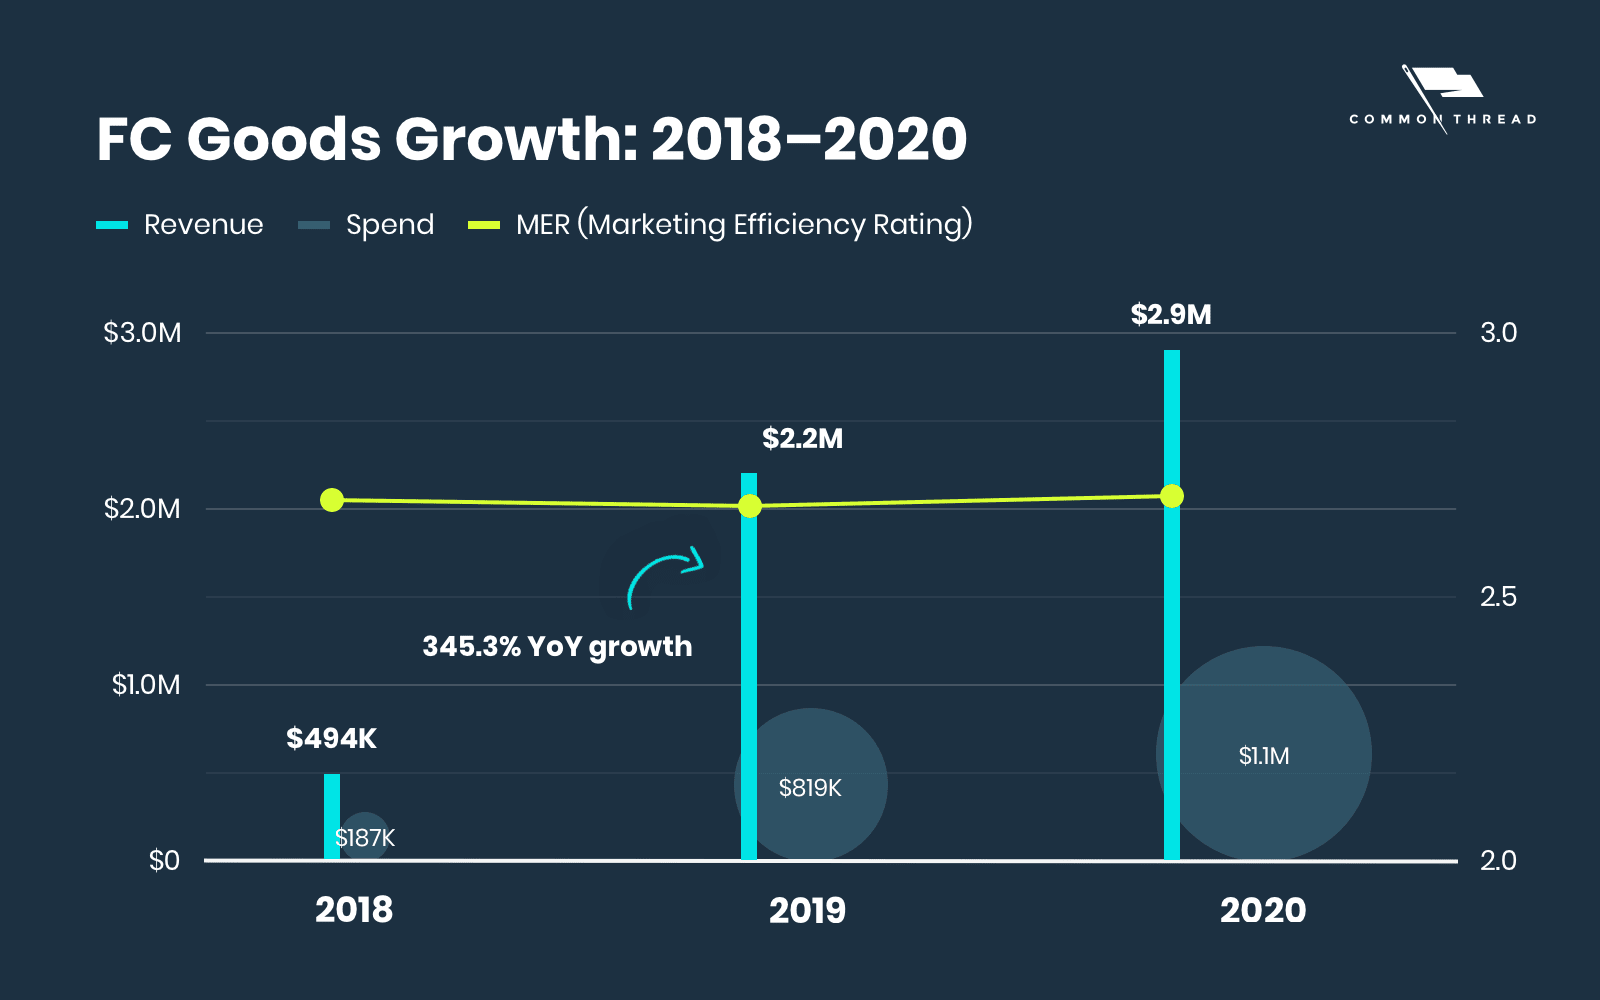 FC Goods Growth: 2018-2020